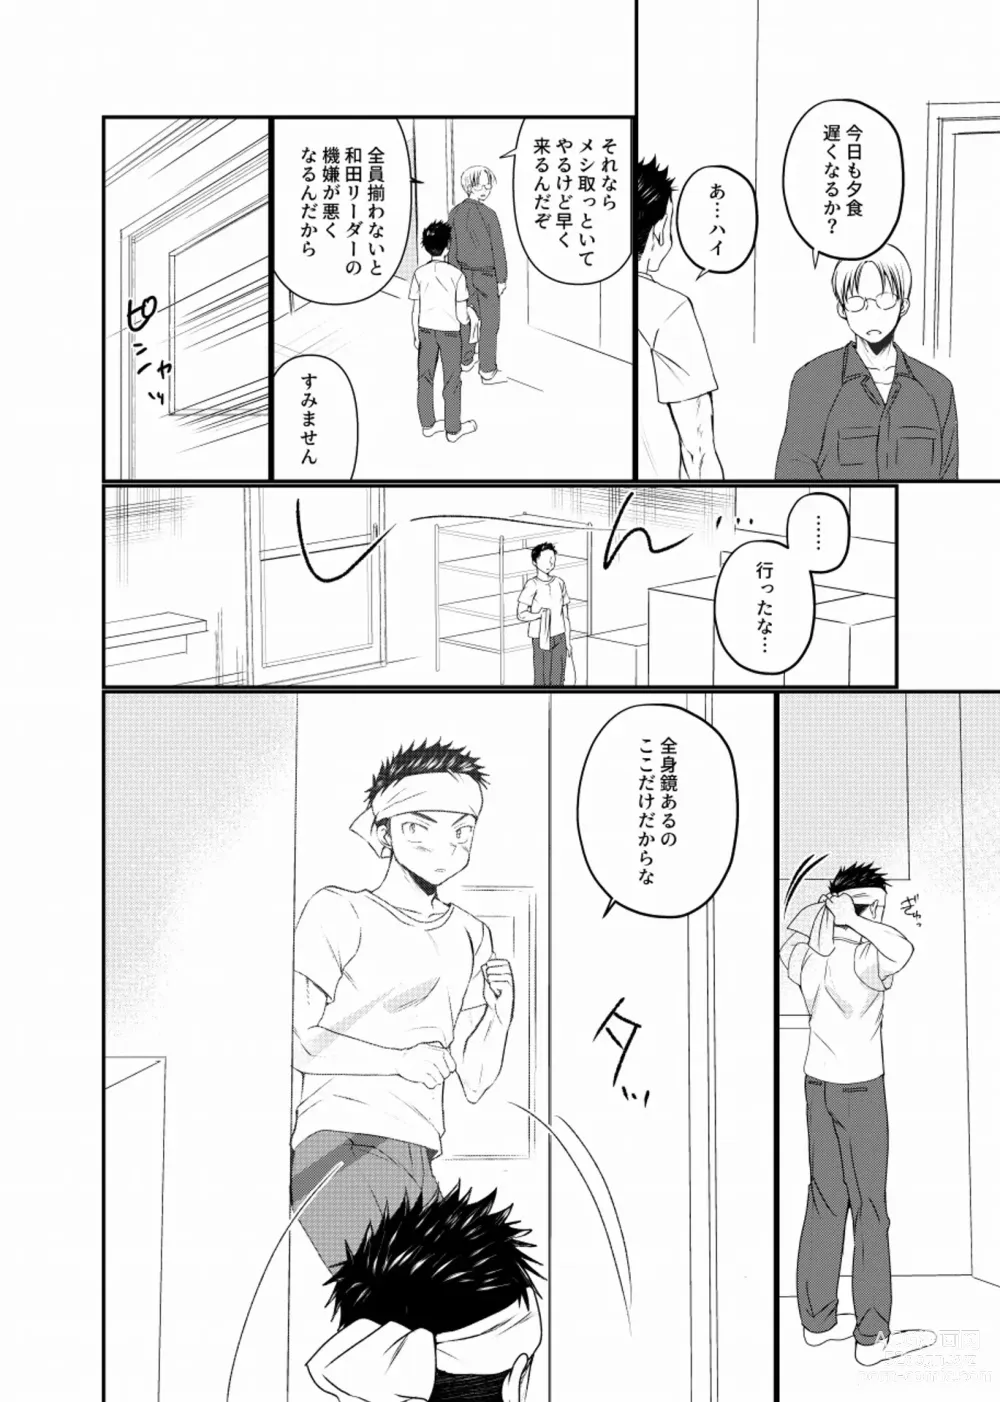 Page 5 of doujinshi 地下労働格闘少年